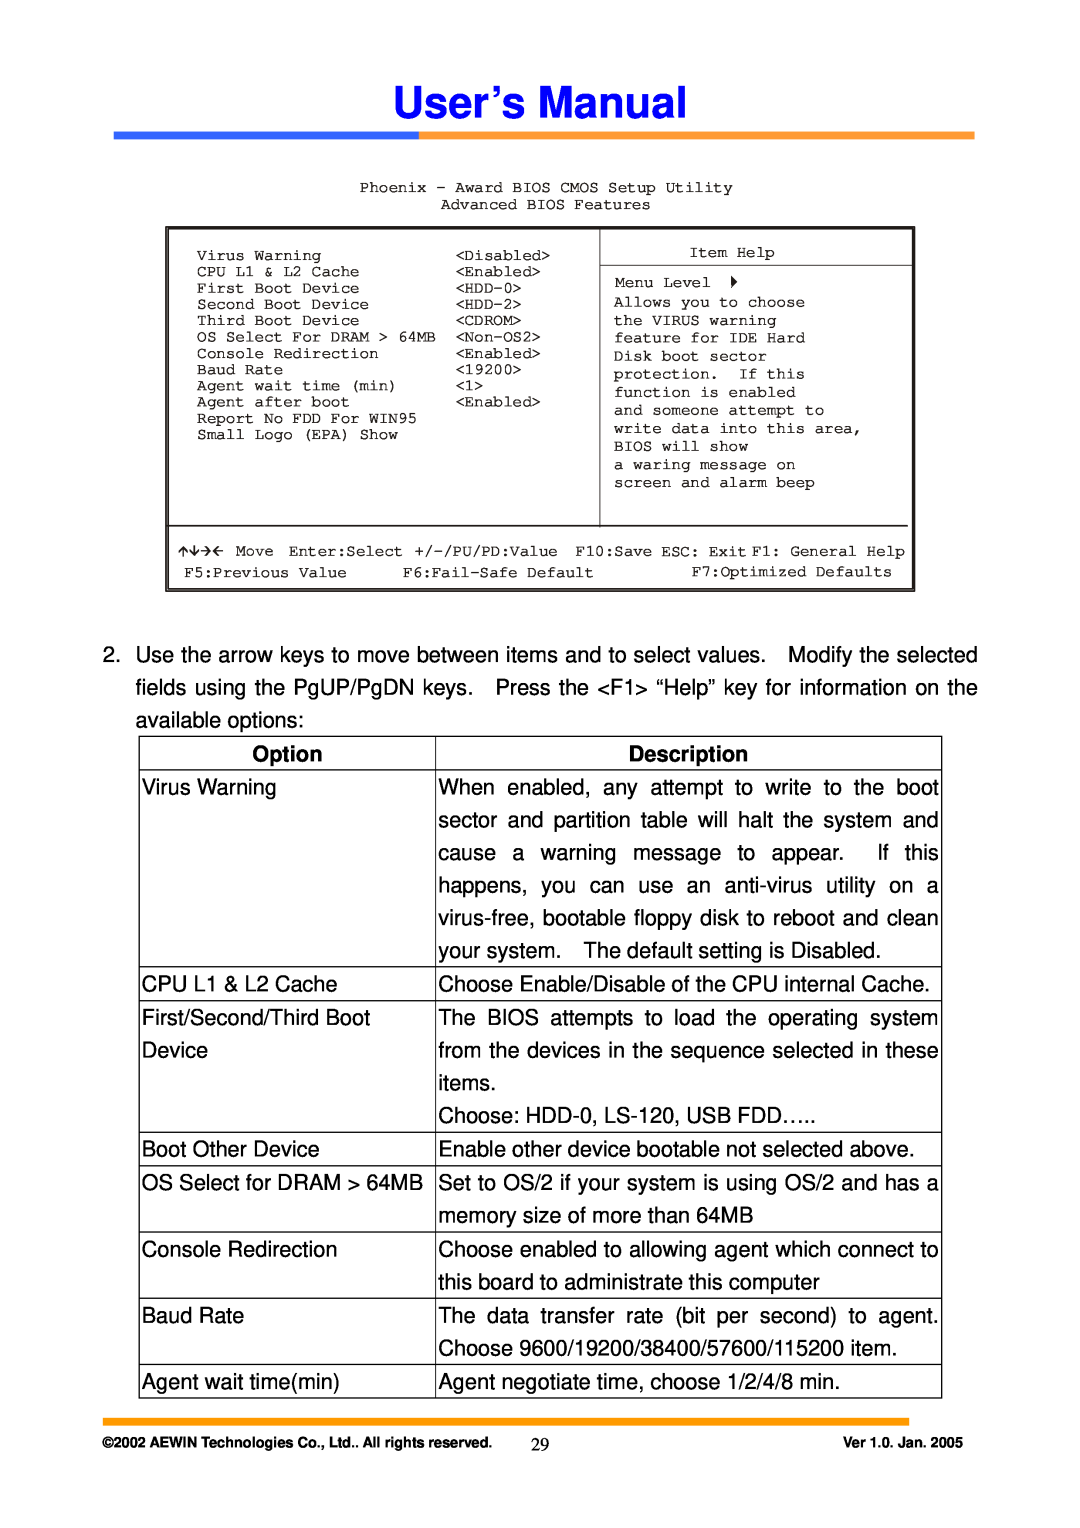 Intel AW-A795 user manual User’s Manual, Option, Description, Virus Warning 